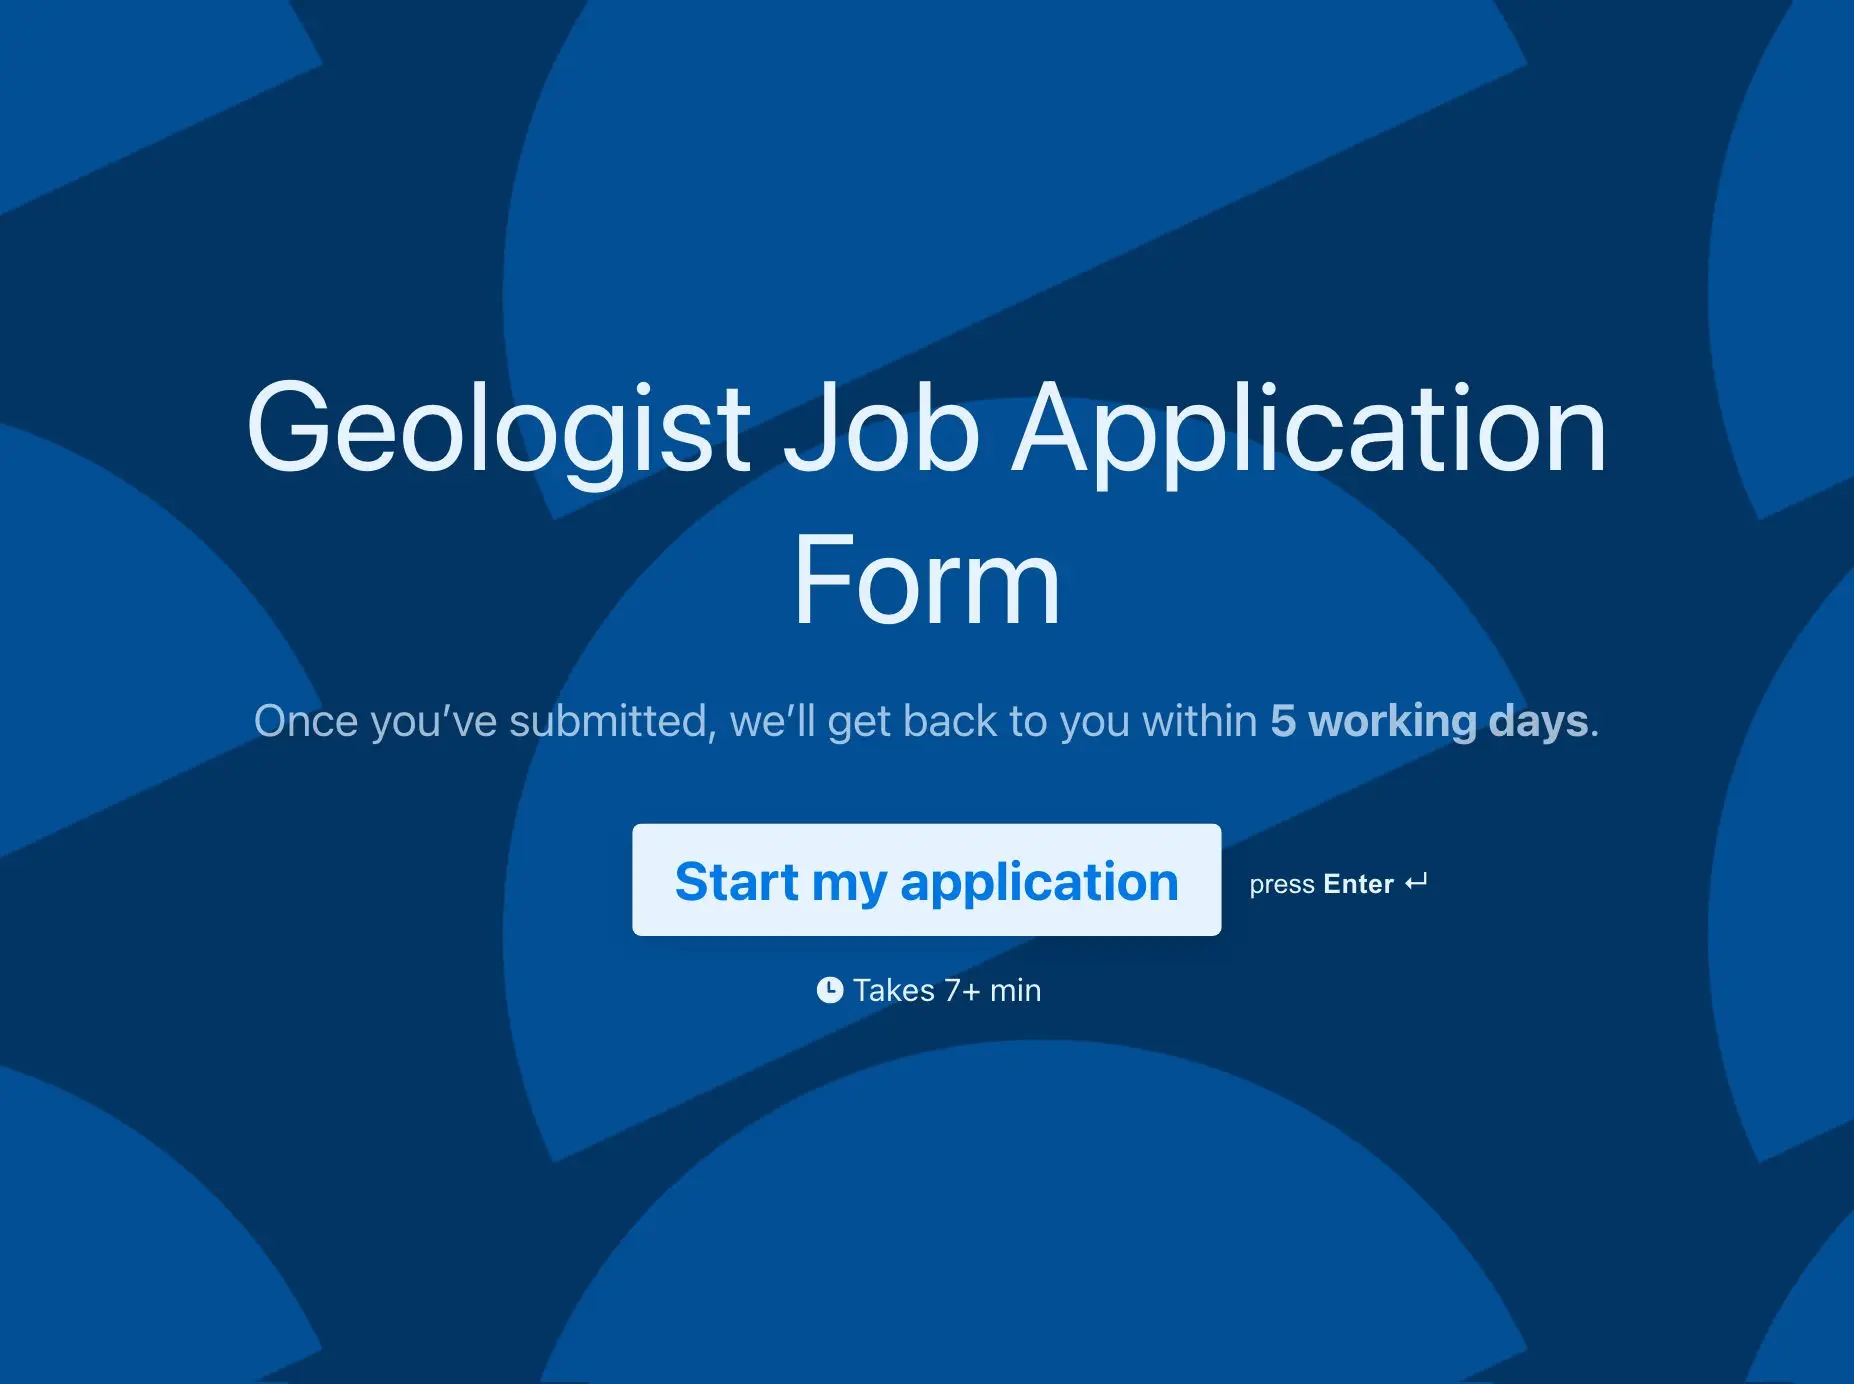 Geologist Job Application Form Template Hero